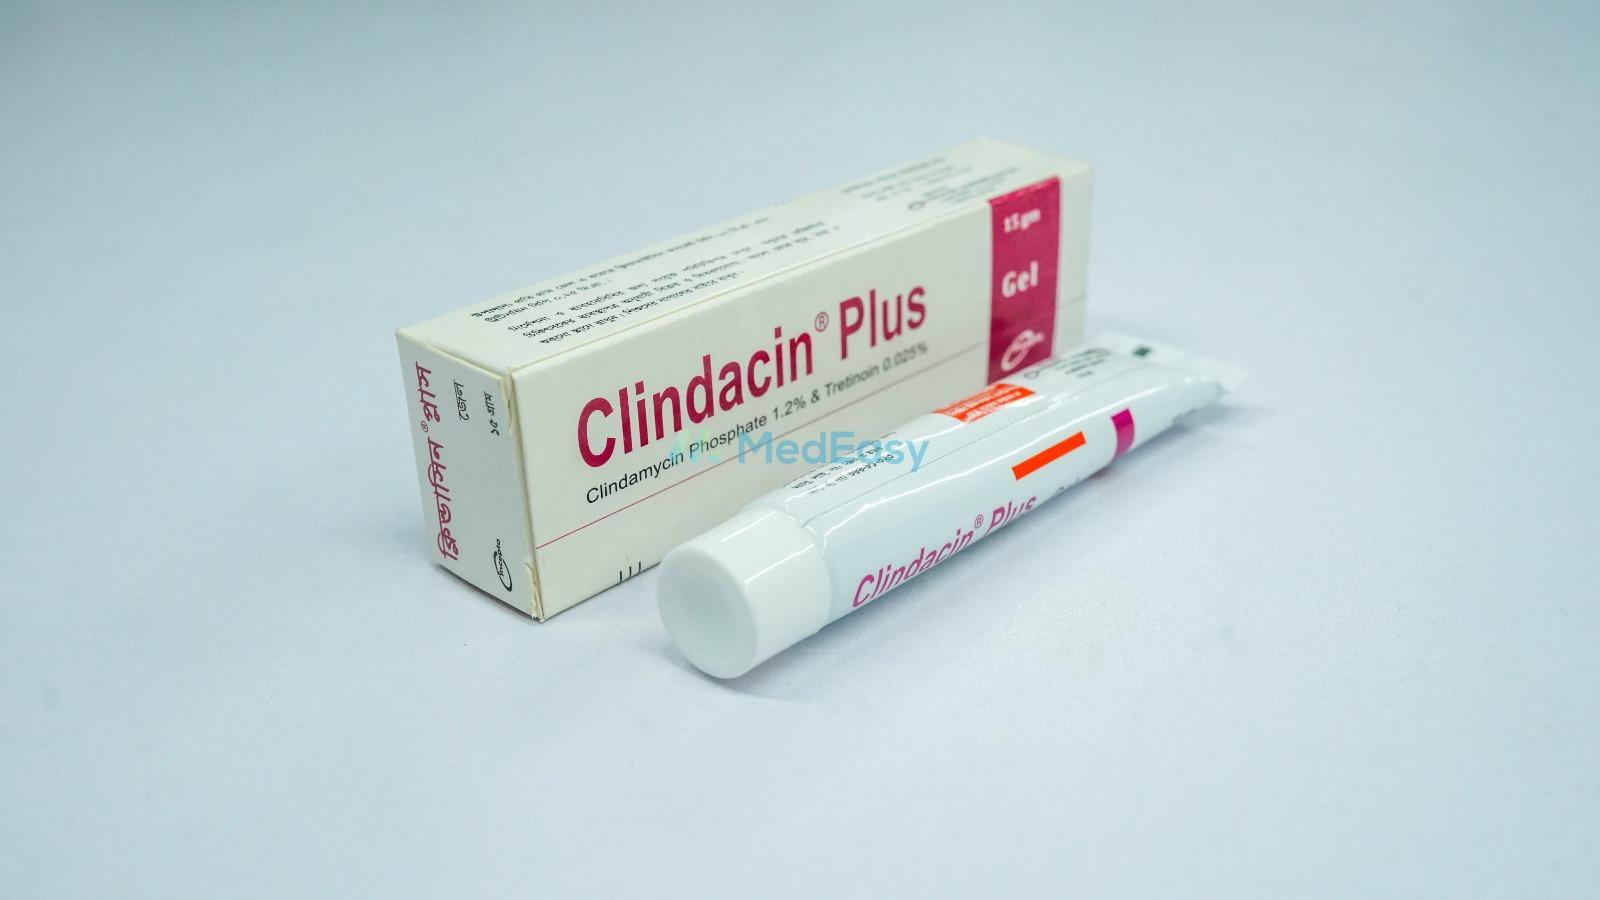 Clindacin Plus